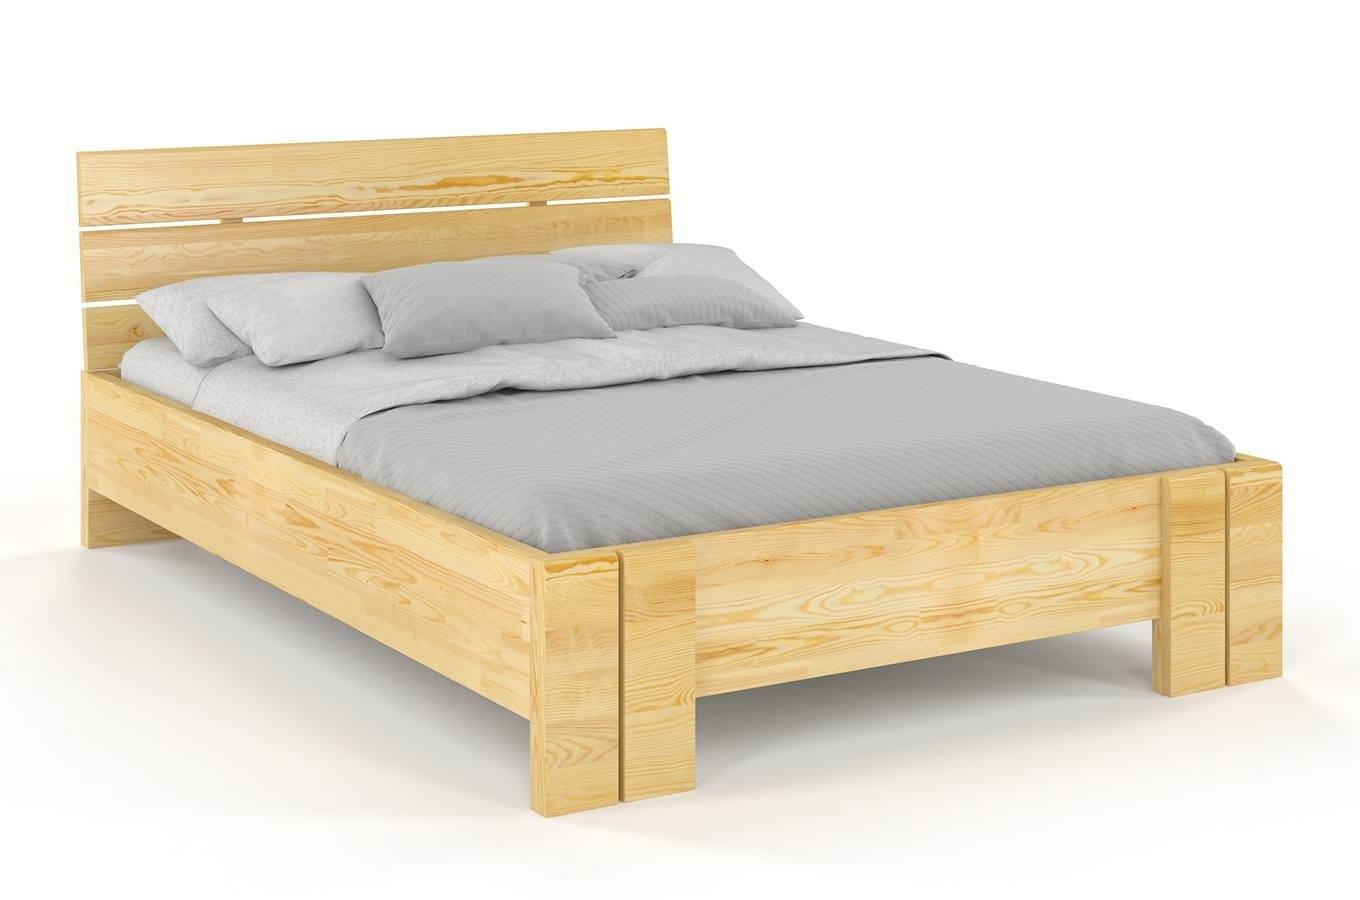 Łóżko drewniane sosnowe Visby ARHUS High BC Long (Skrzynia na pościel) / 120x220 cm, kolor naturalny